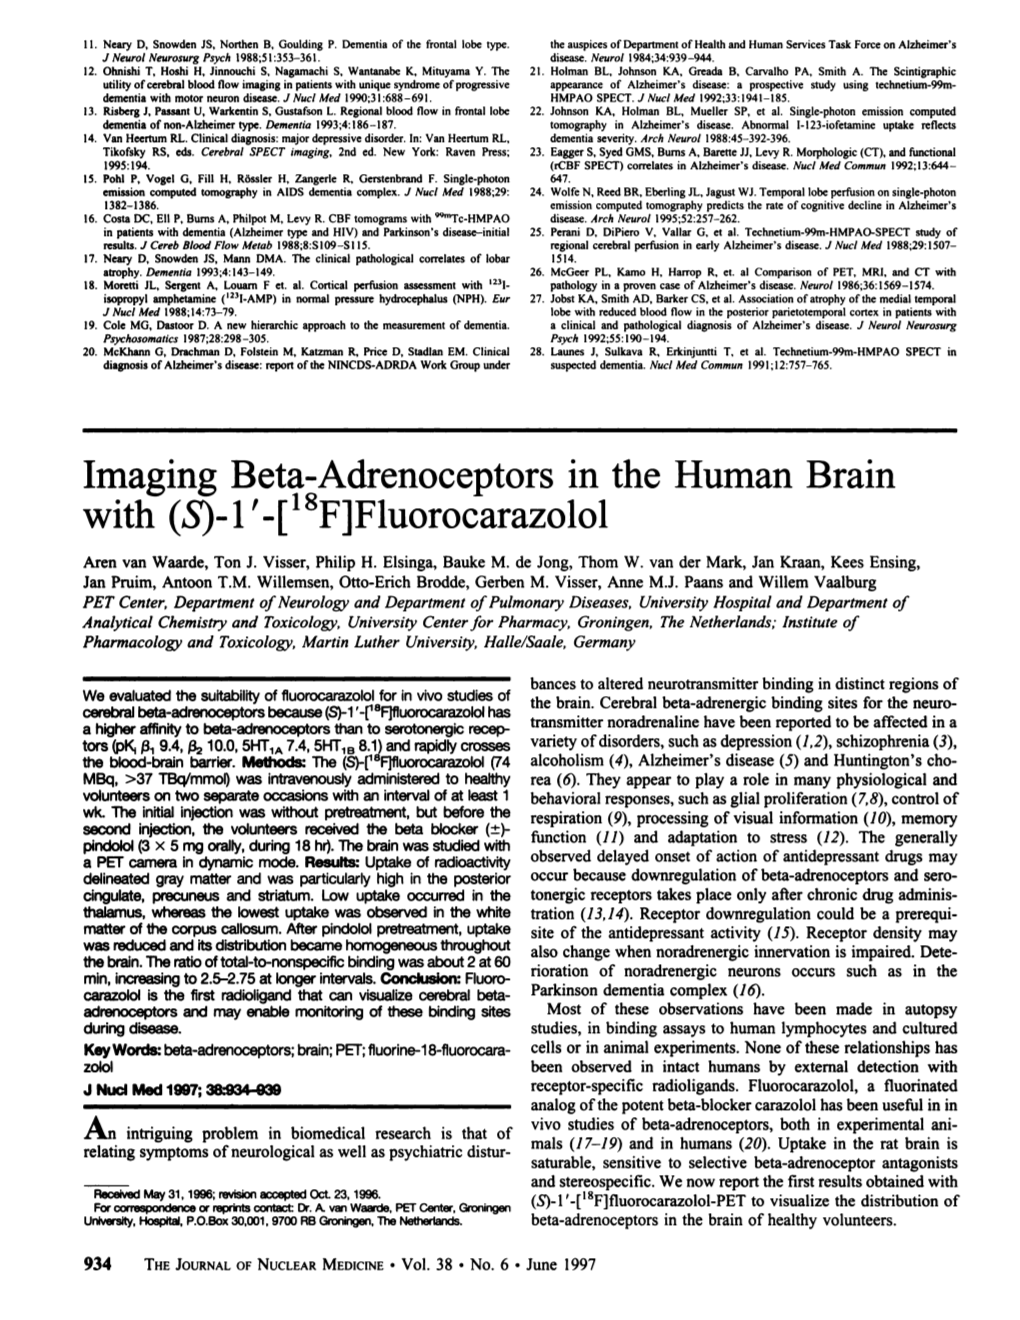 Imaging Beta-Adrenoceptors in the Human Brain with (5)-L'-[18F]Fluorocarazolol